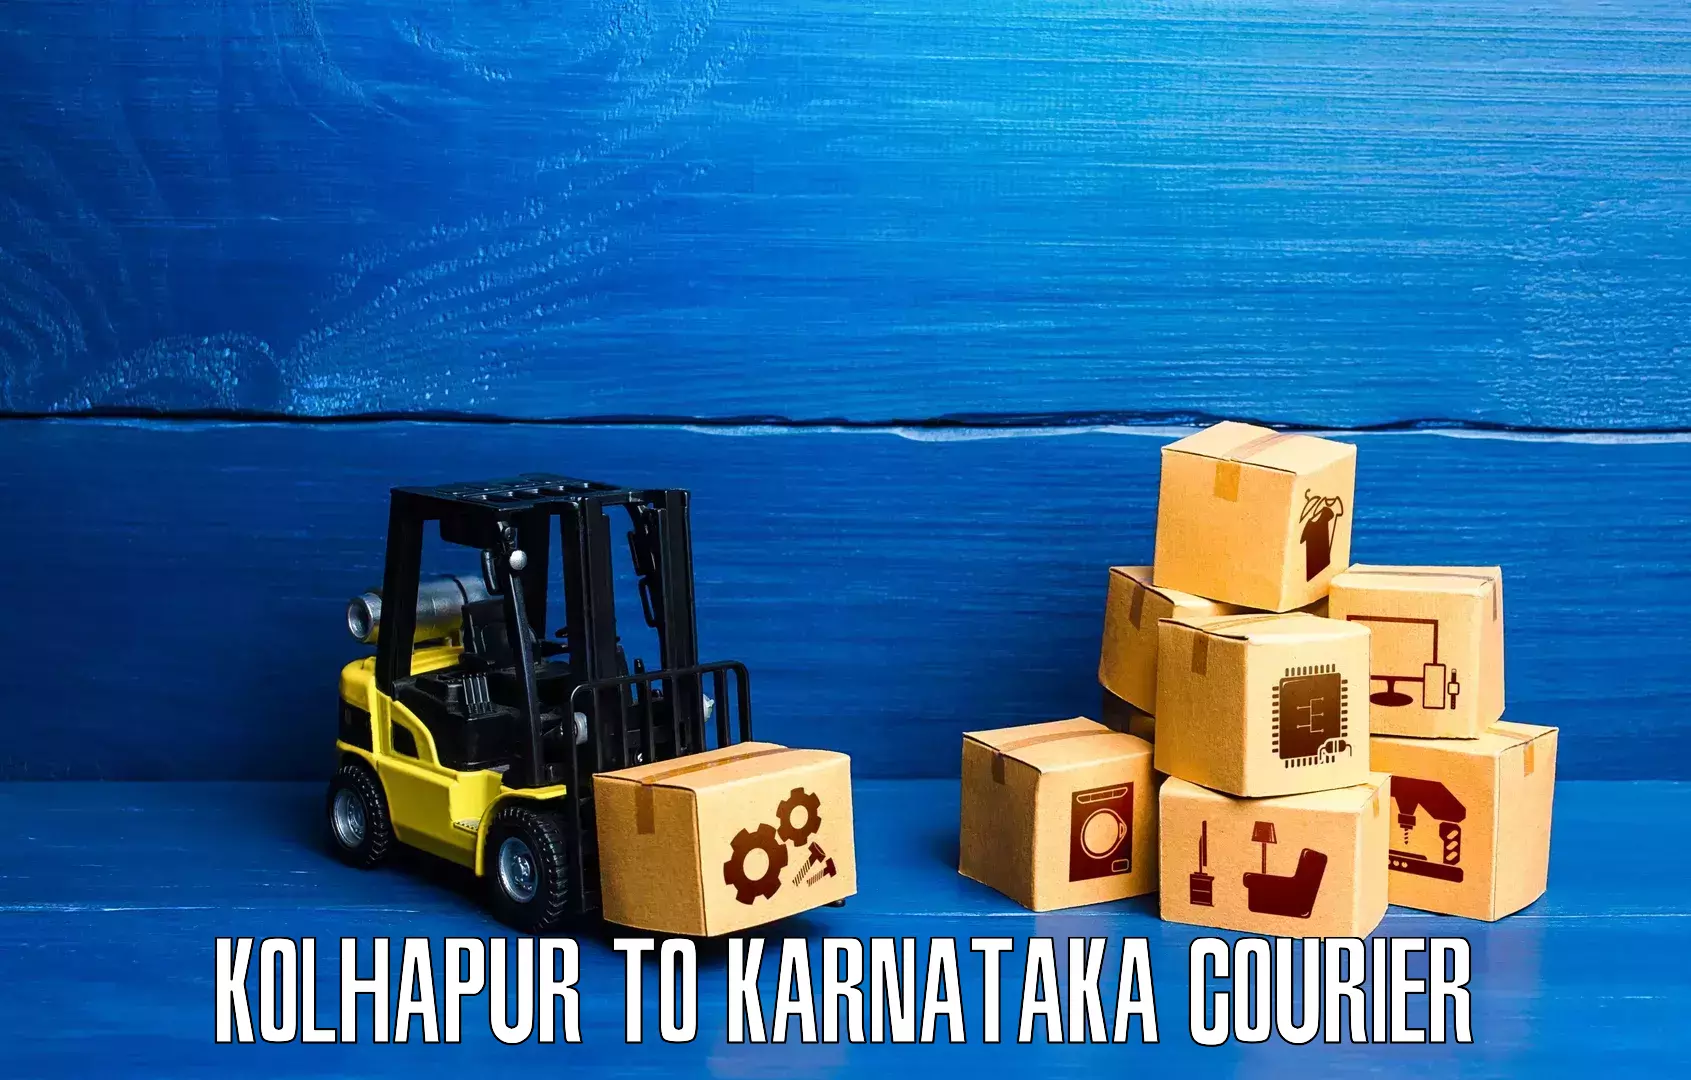 Courier service comparison Kolhapur to Karnataka